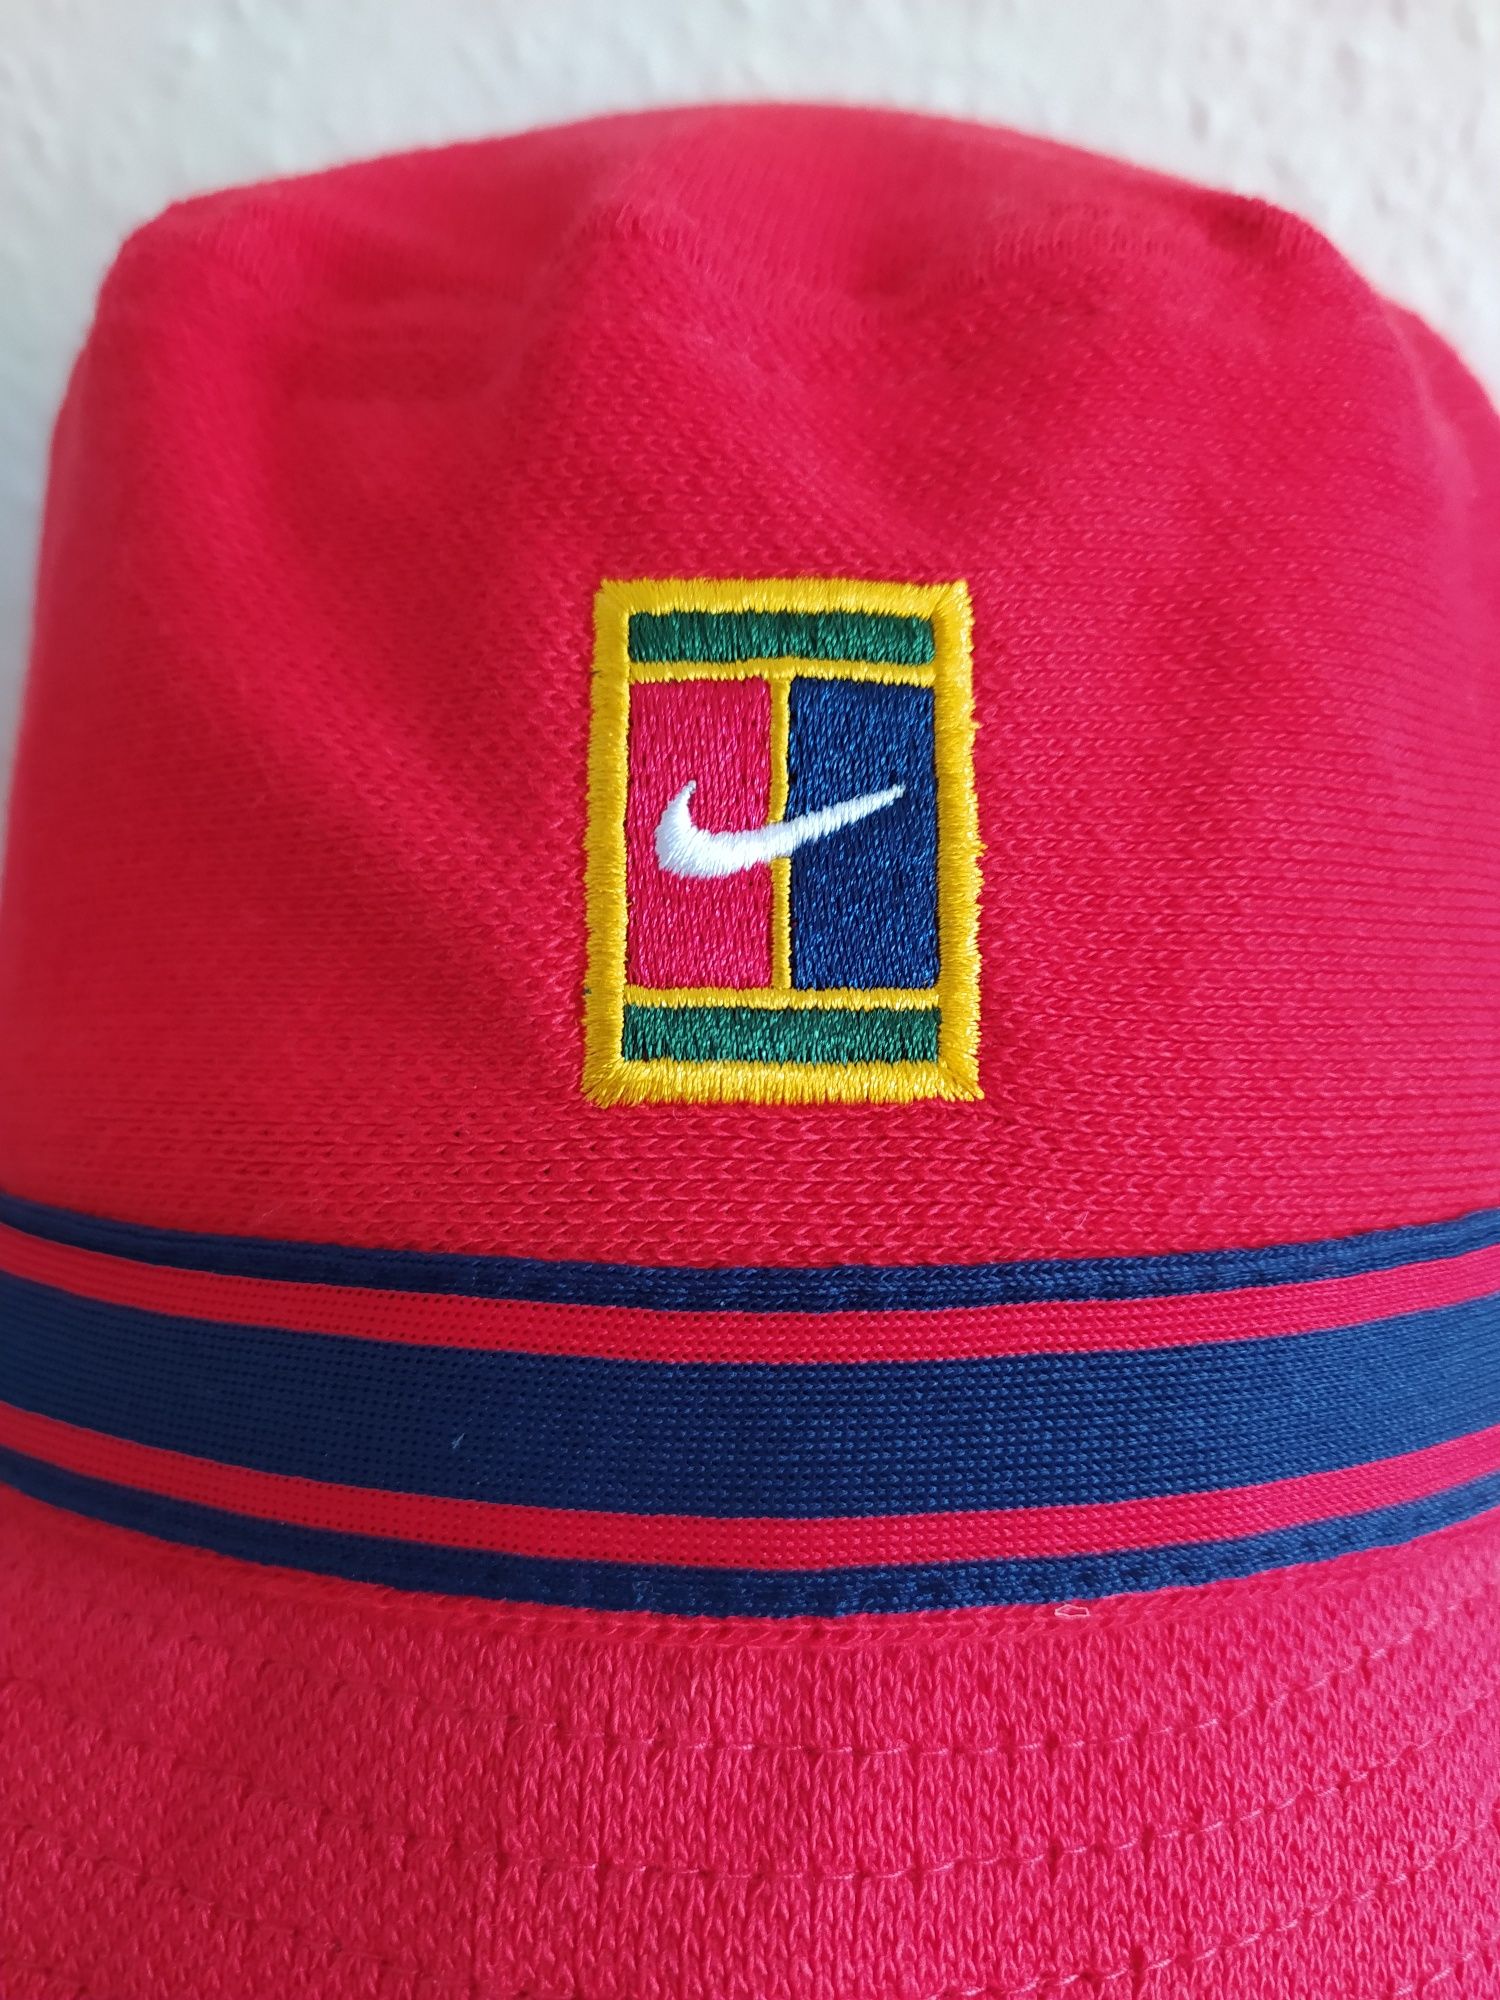 Теннисная кепка панама Nike Heritage Bucket новая оригинал